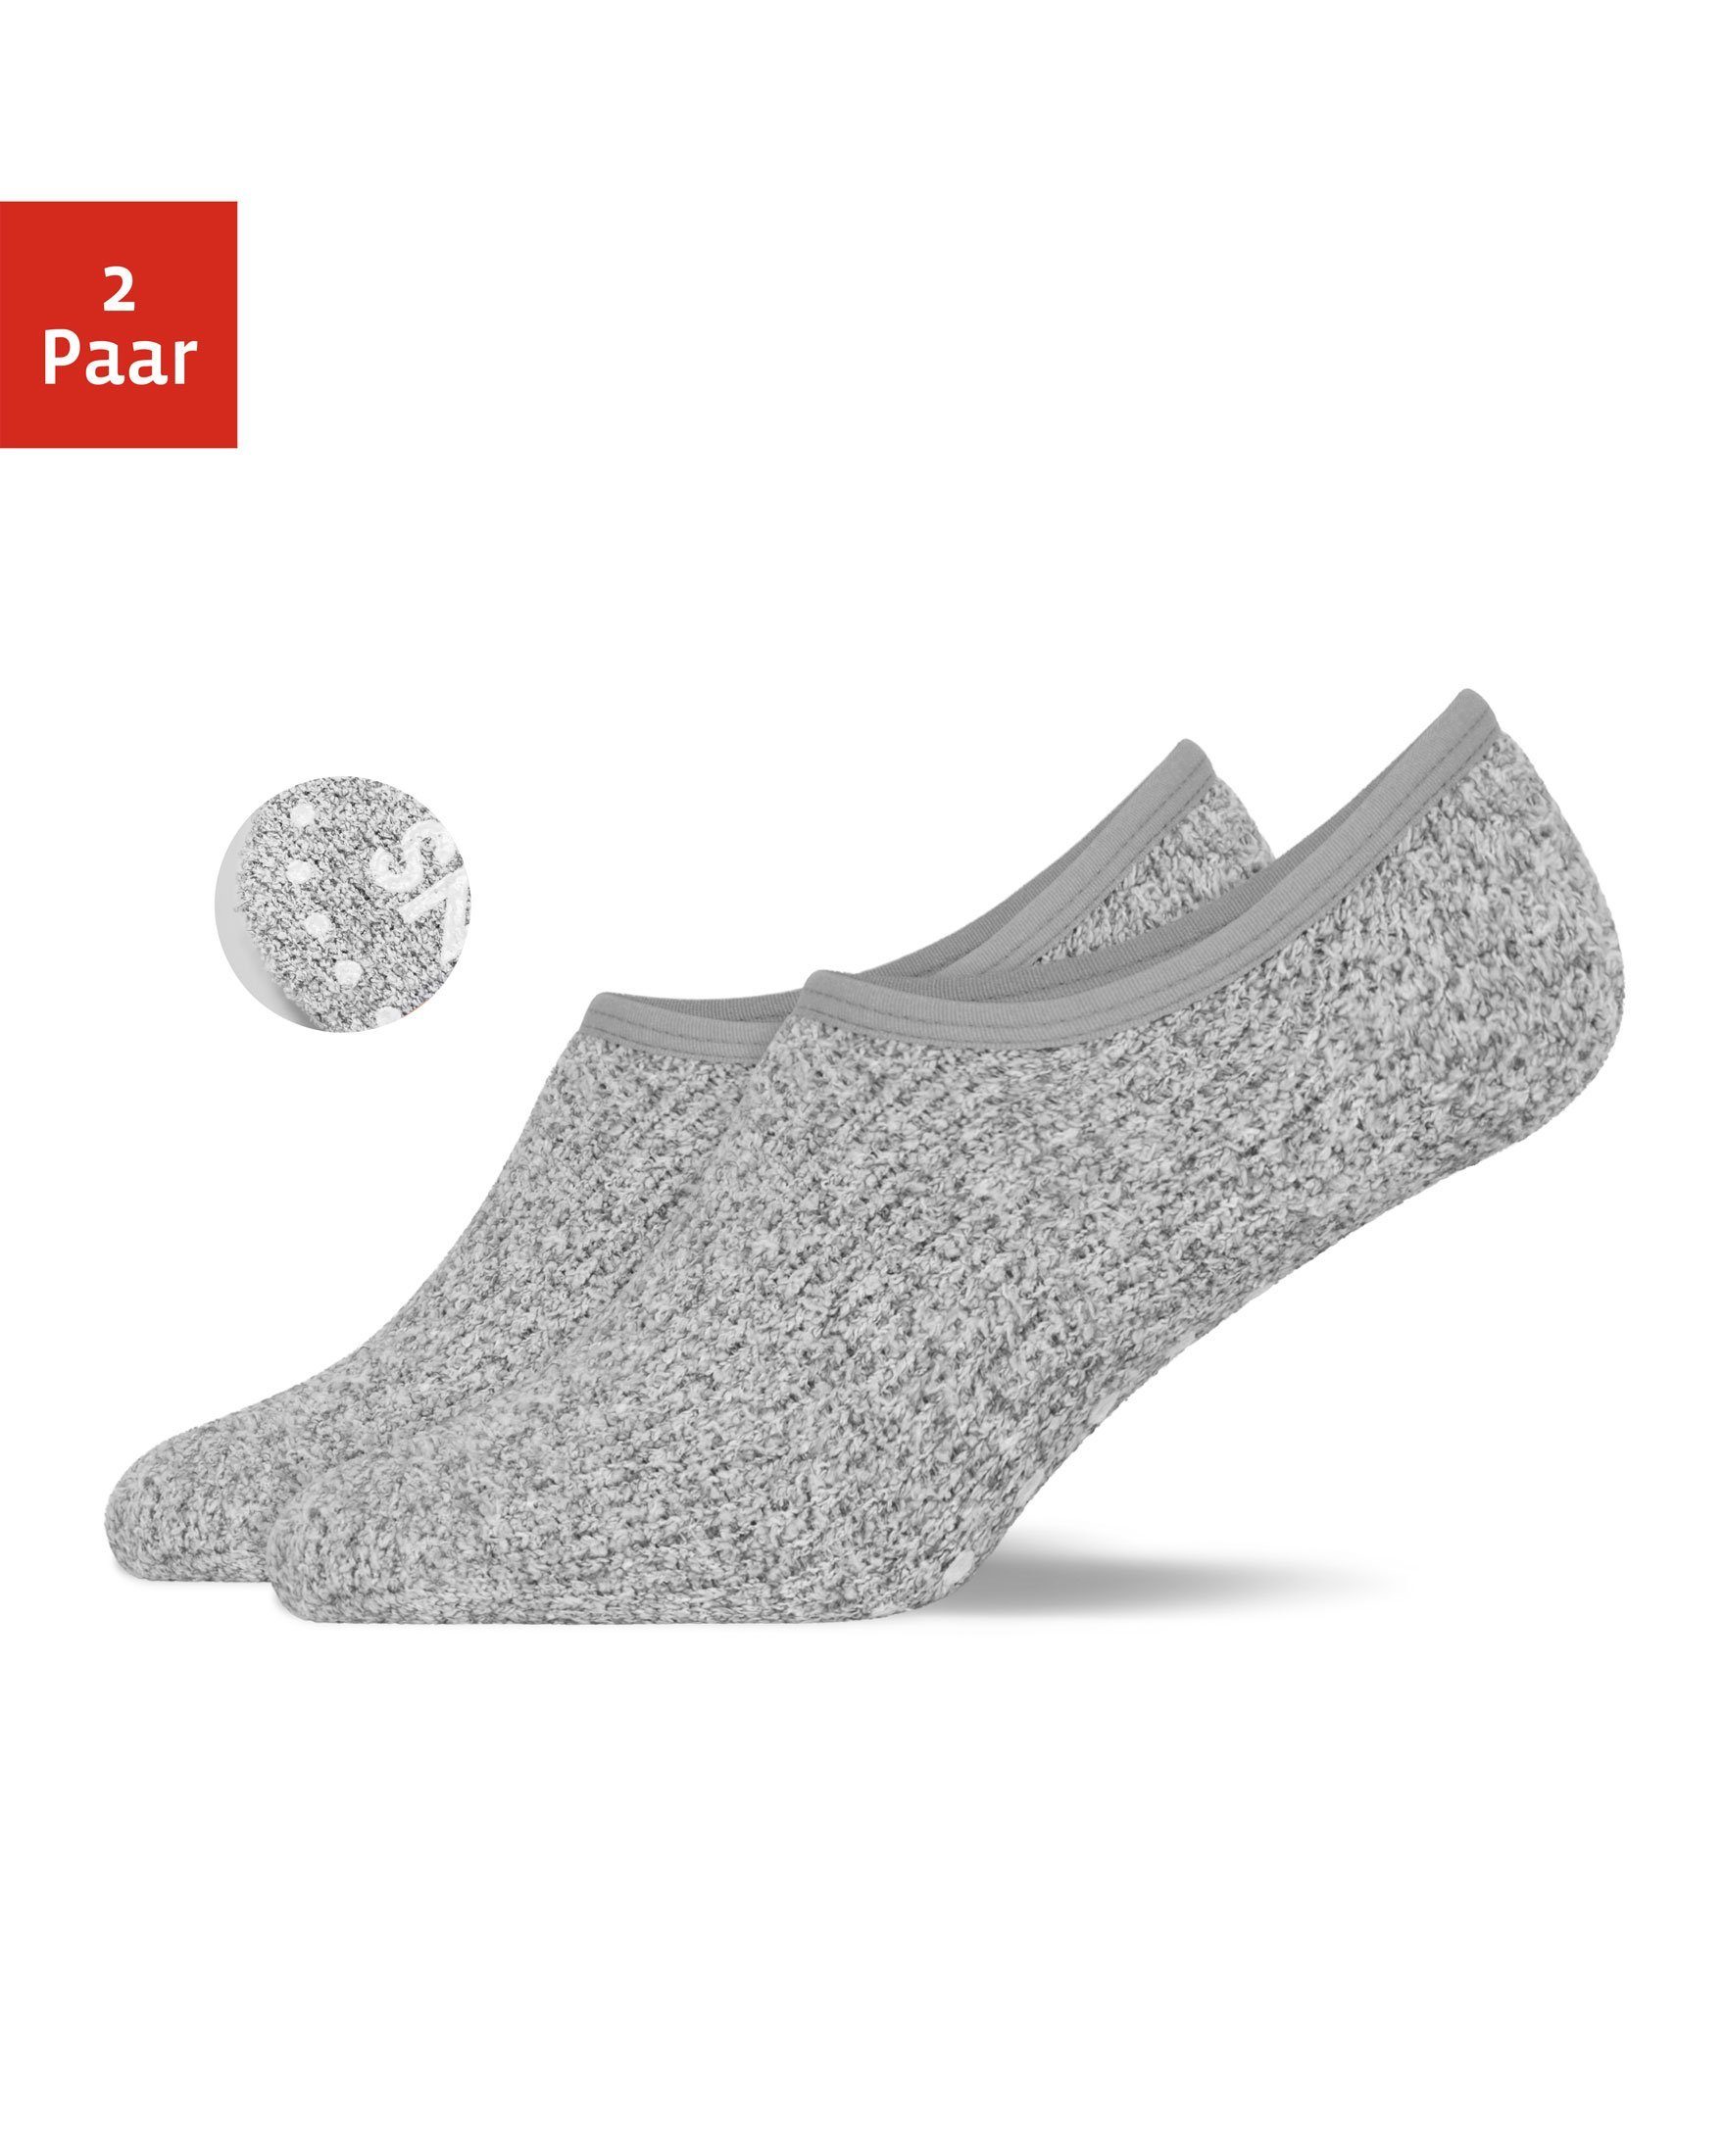 SNOCKS Füßlinge Fluffy Invisible Socks Sneaker Socken Damen Herren (2-Paar) Anti-Rutsch-Socken, kuschelig weich für den Winter Grau